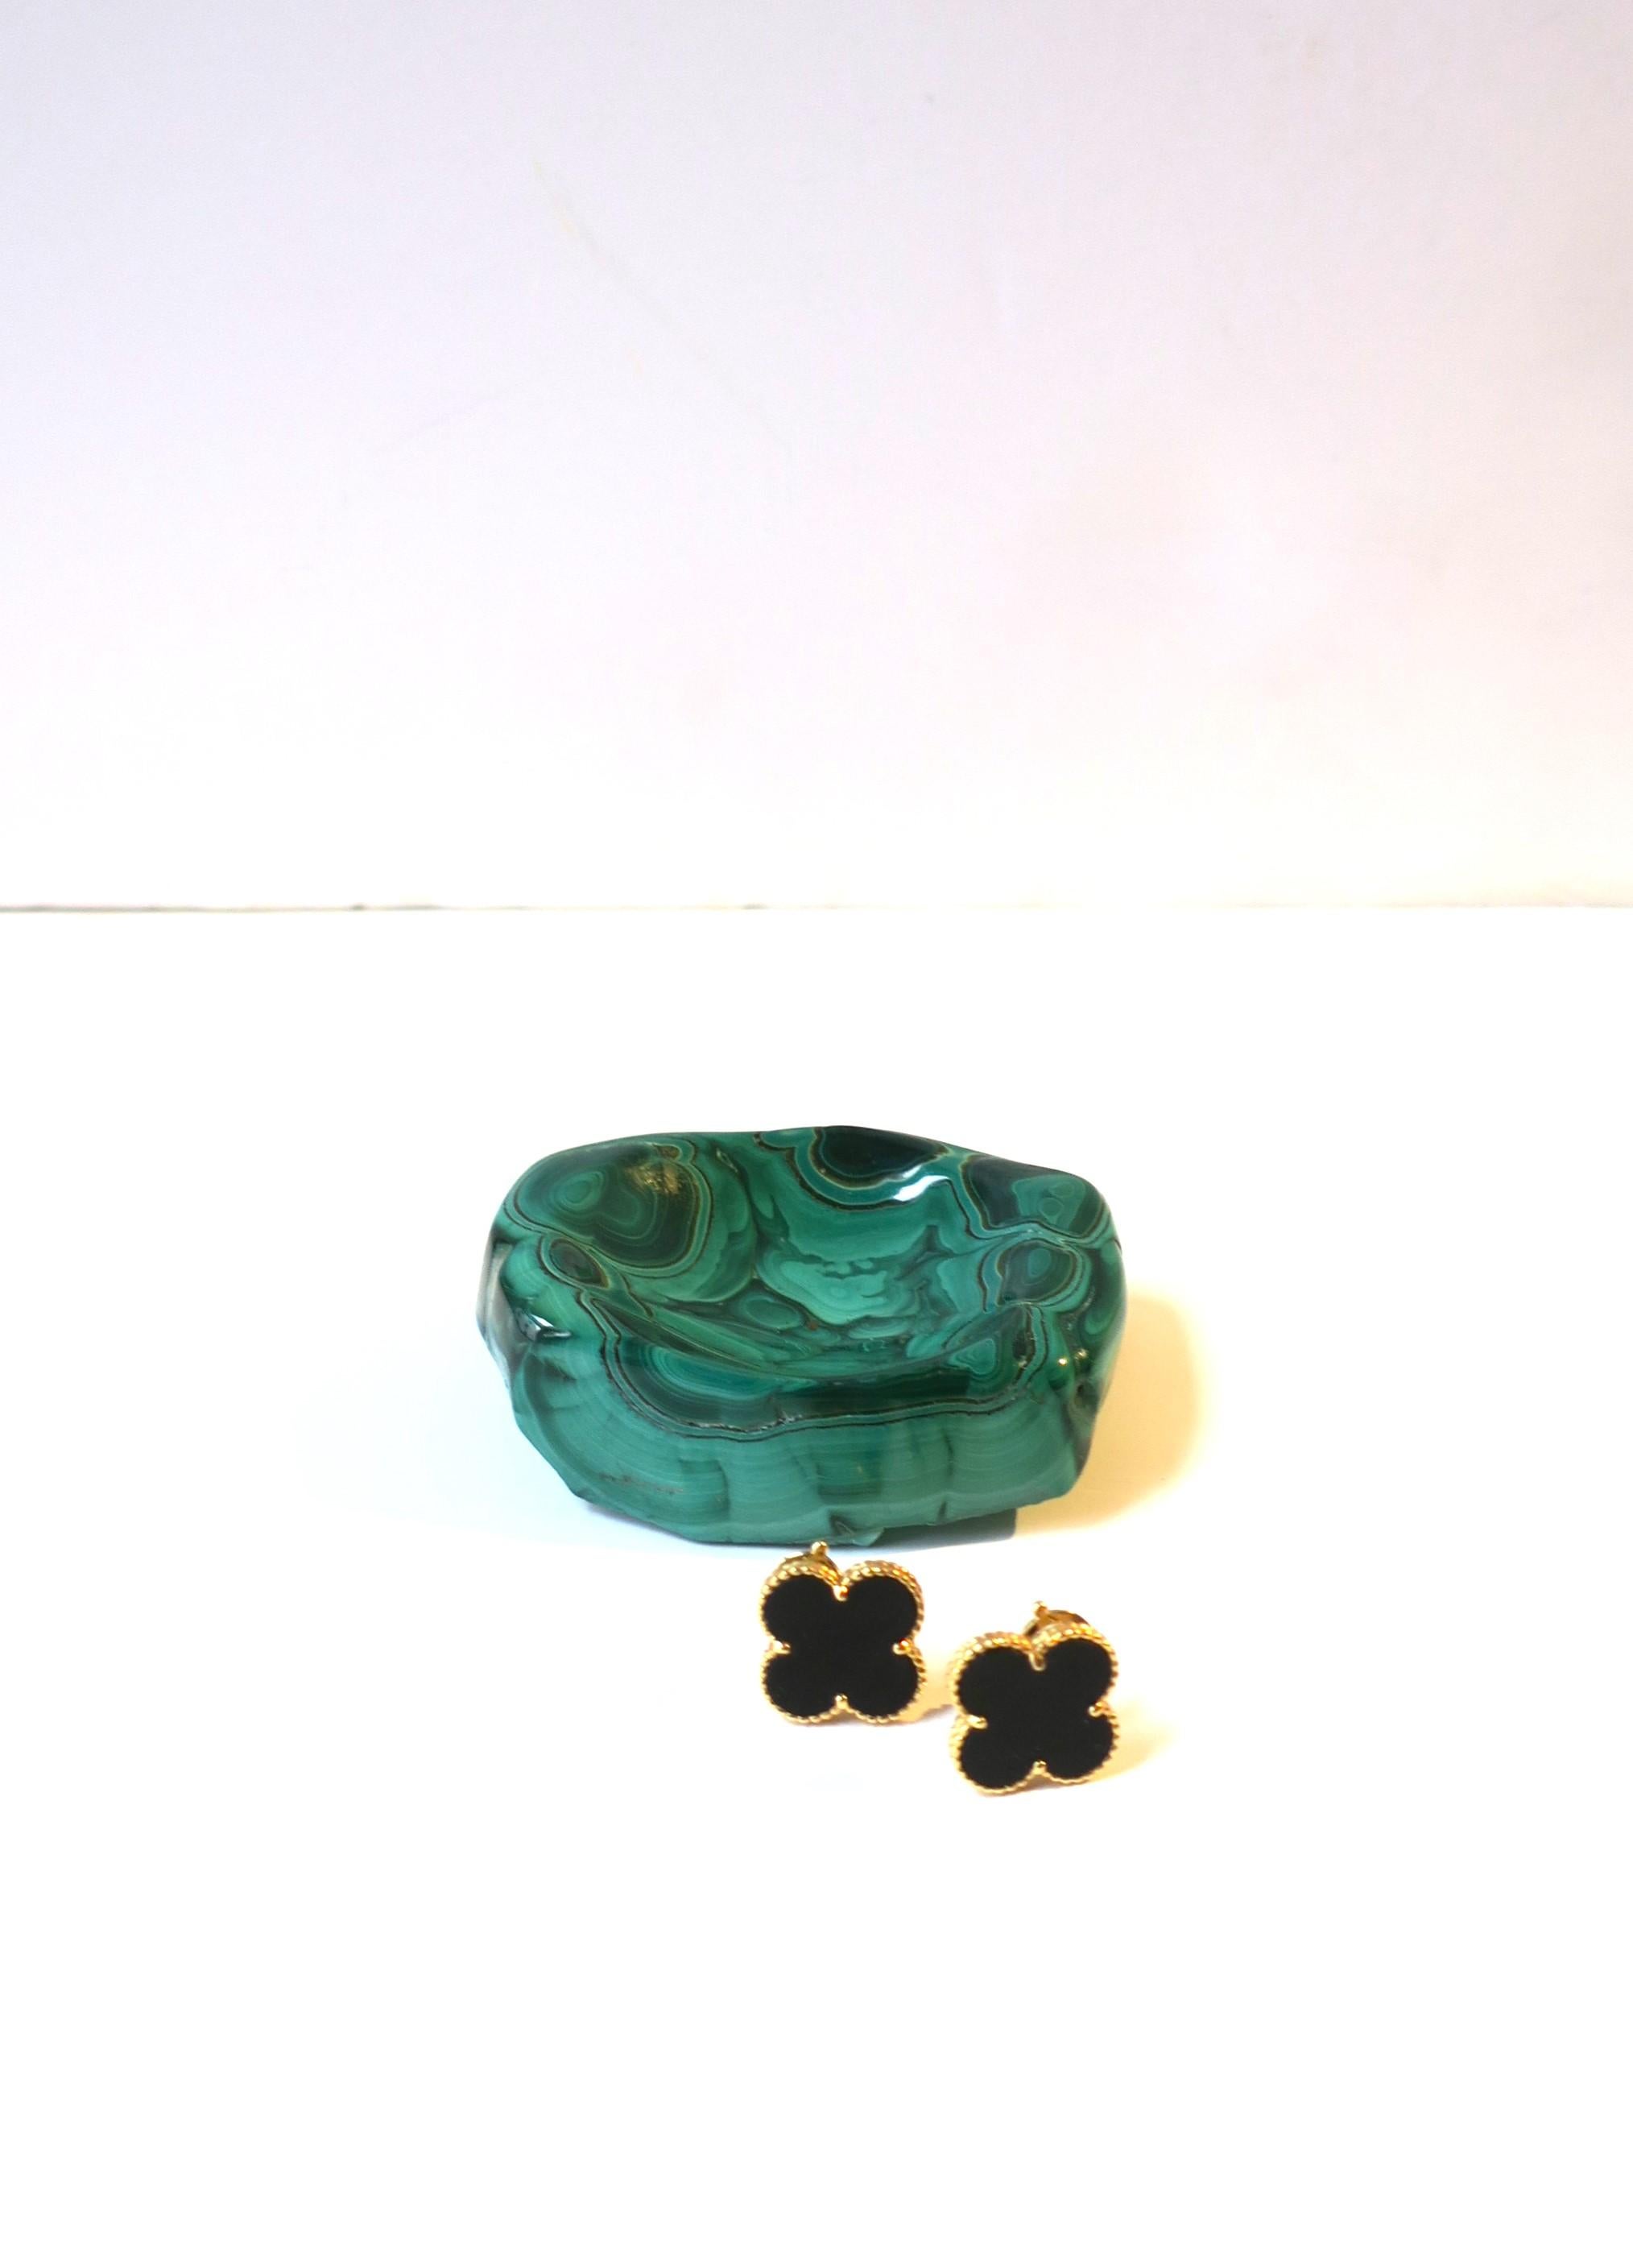 Malachite Jewelry Dish Vide-Poche In Good Condition For Sale In New York, NY